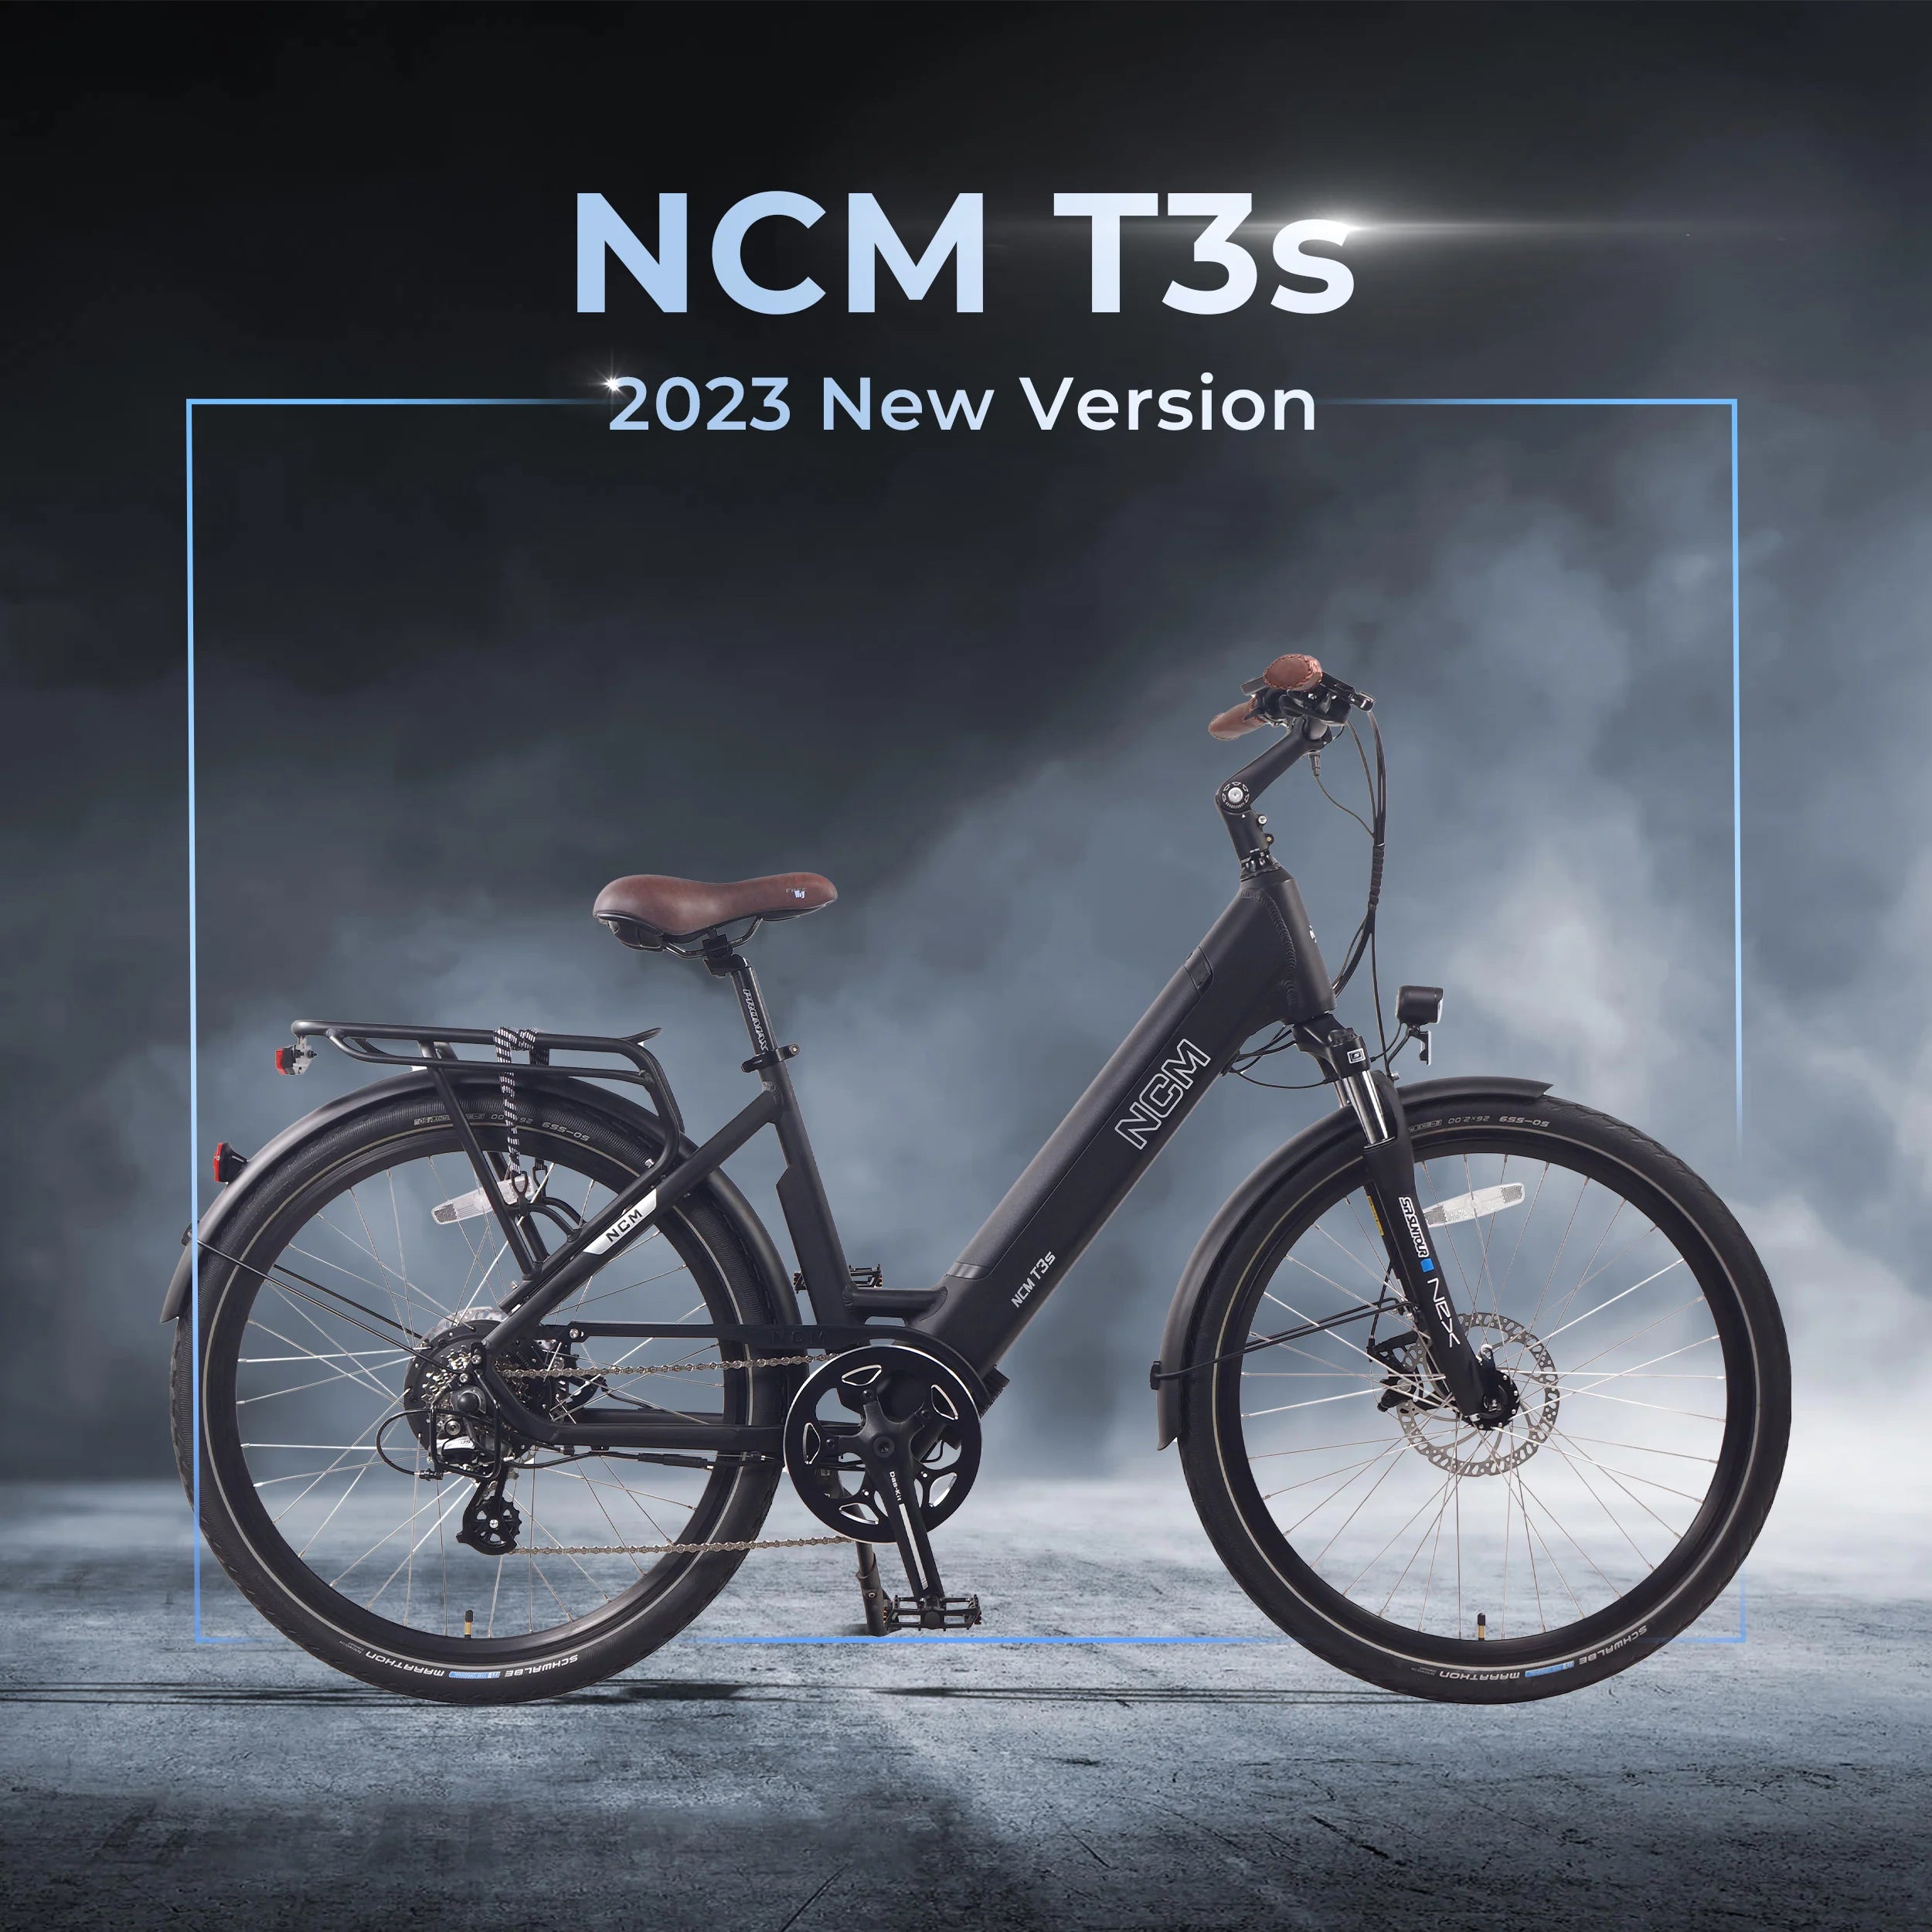 NCM T3S - New Version